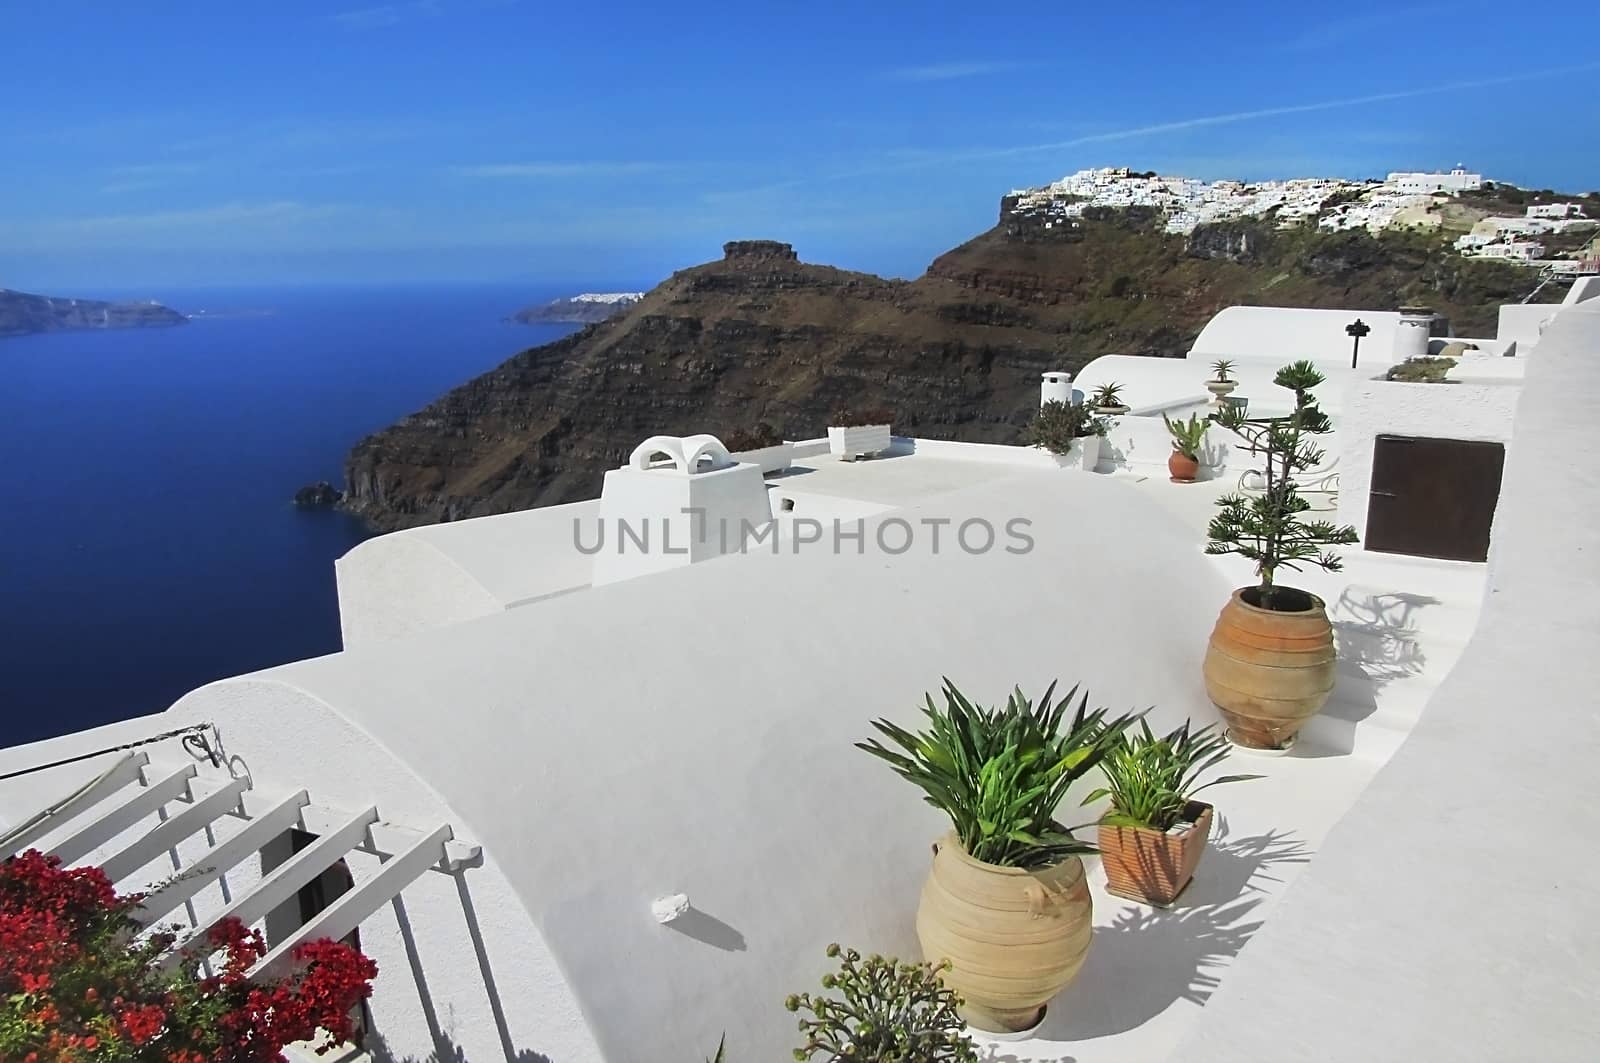 picturesque view of the Santorini island, Greece by irisphoto4